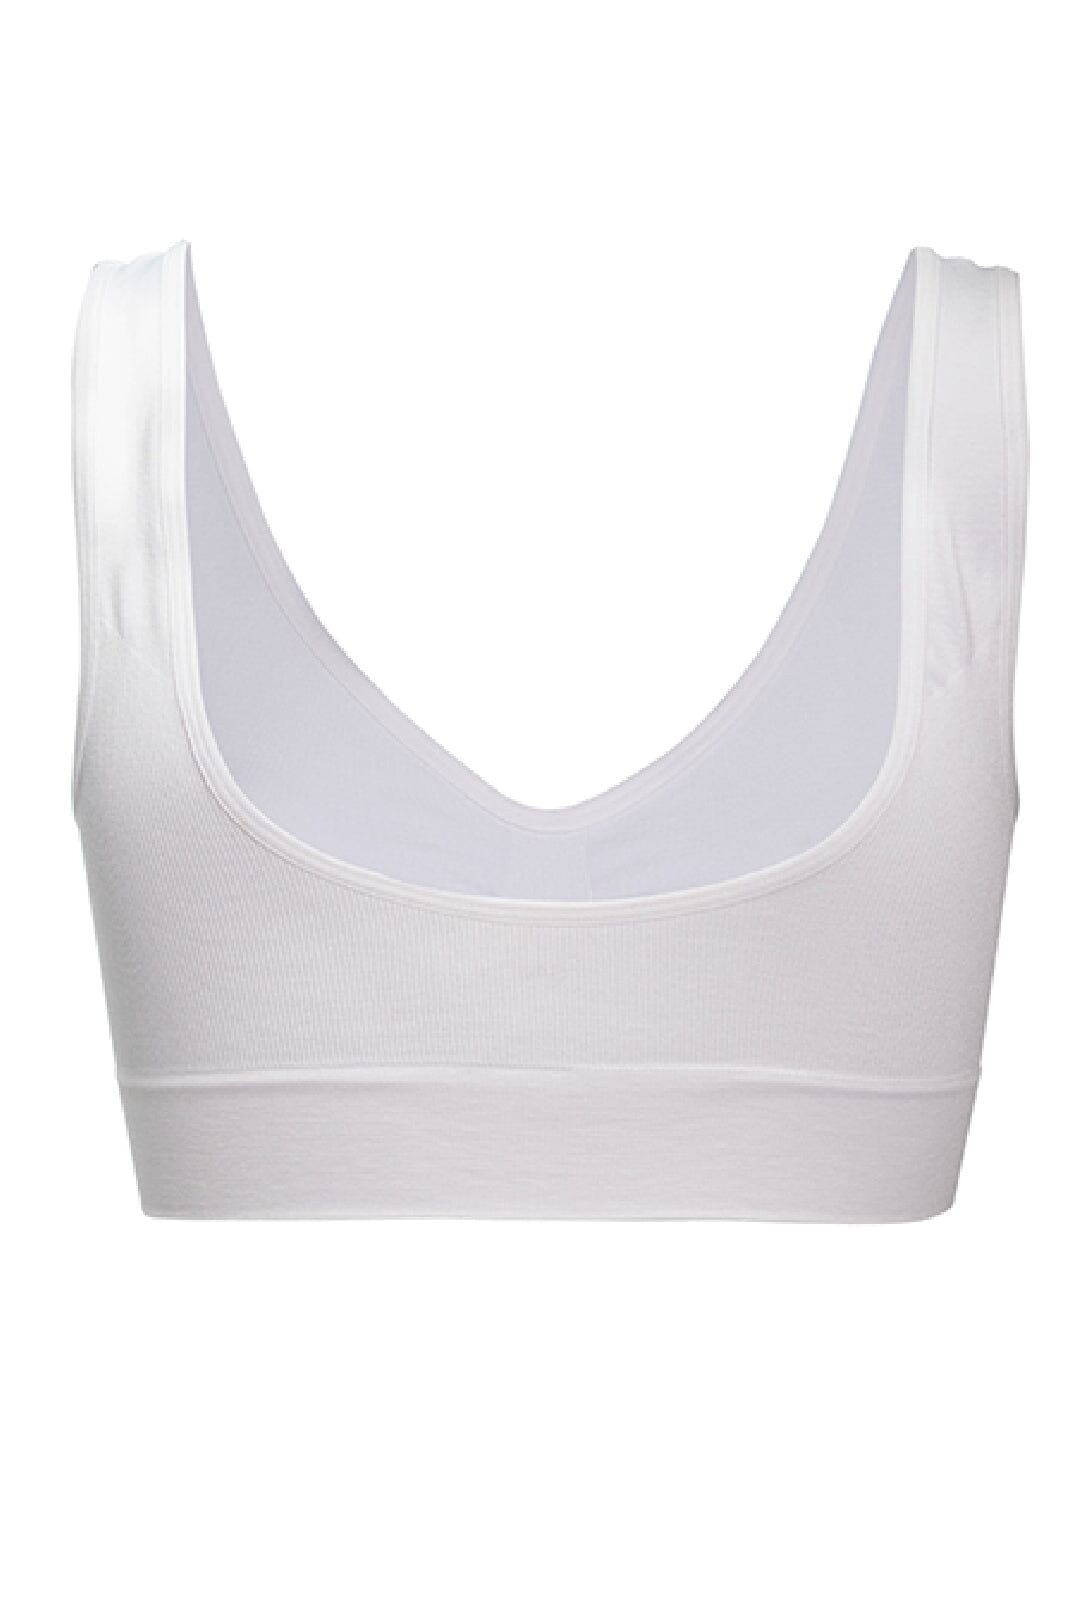 Soft basic - Haily Bra top wide strap 2 pak - white BH 